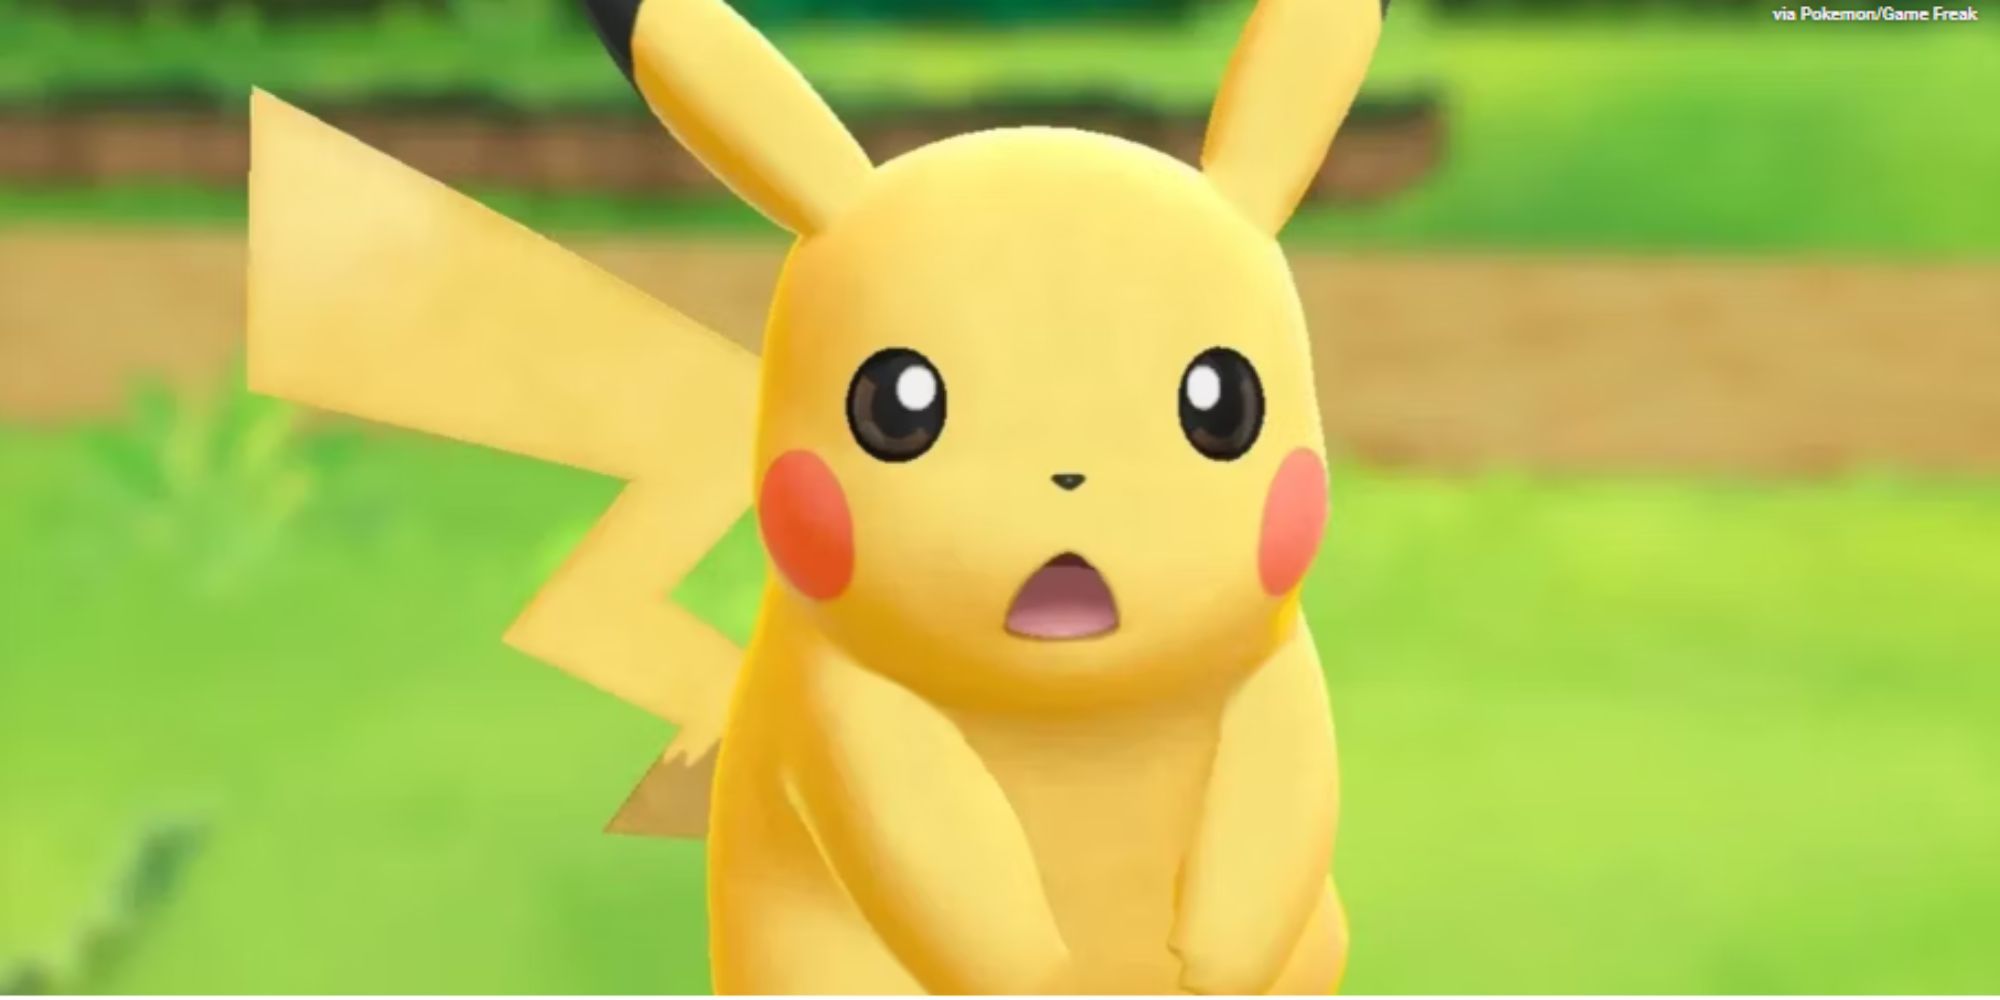 Pikachu looking shocked in Pokemon Let's Go Pikachu